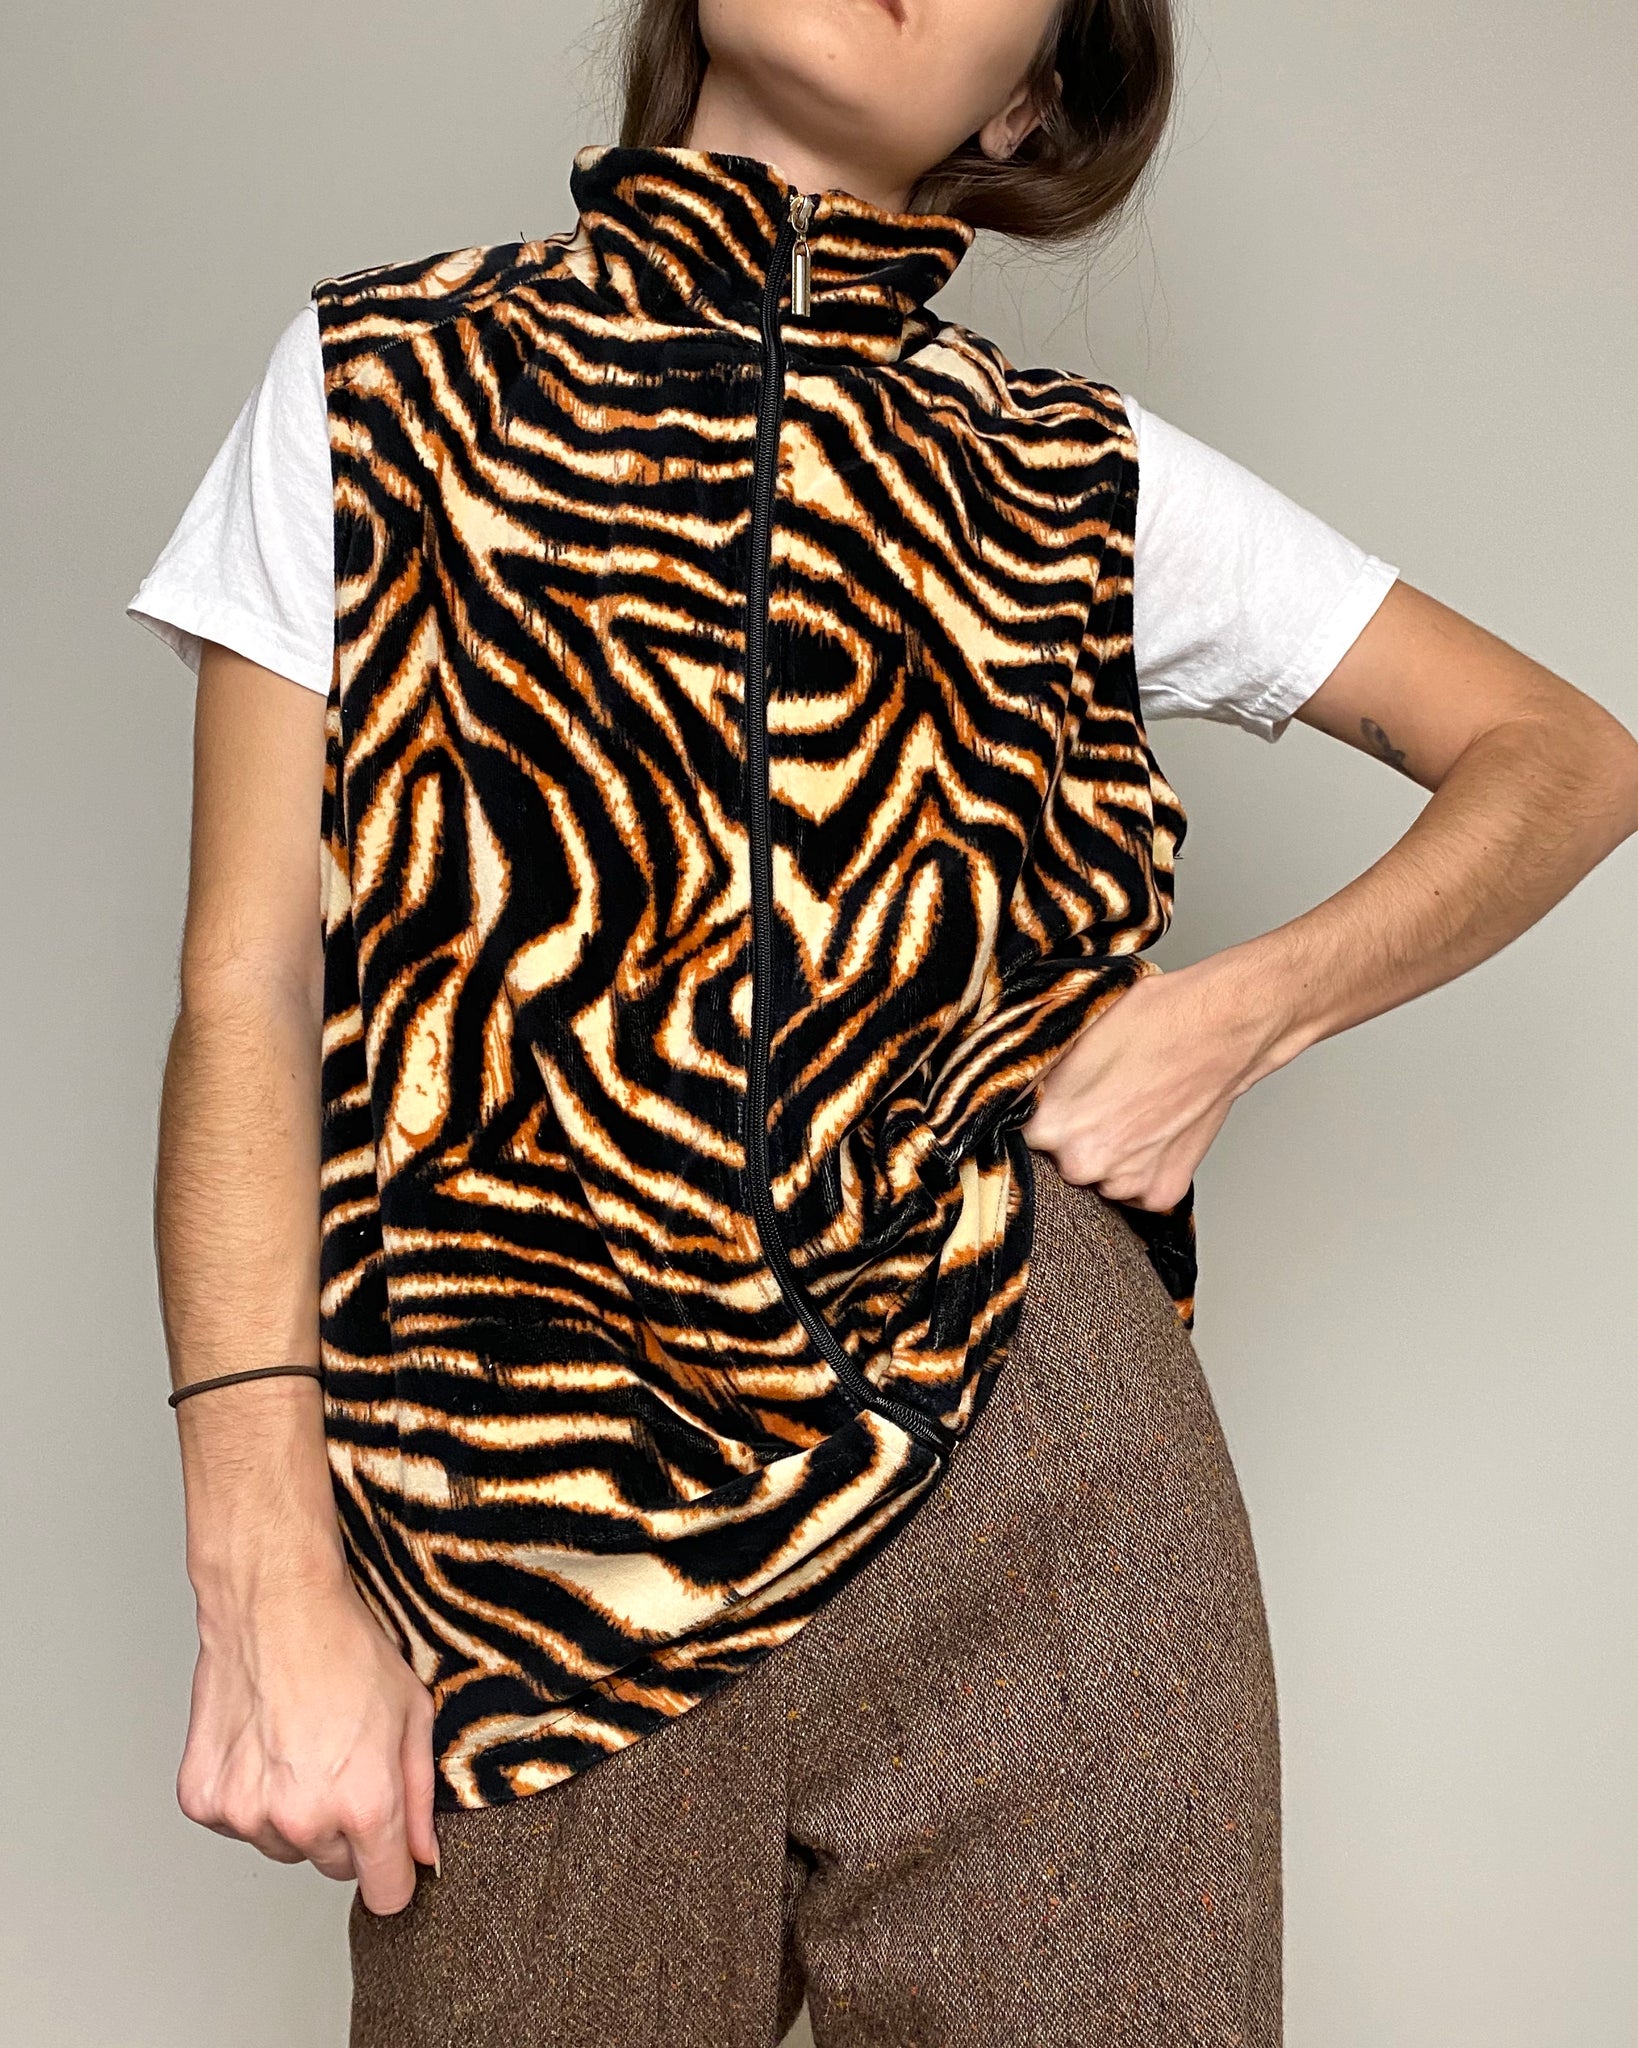 2000s Zebra Fleece Vest (size XL)